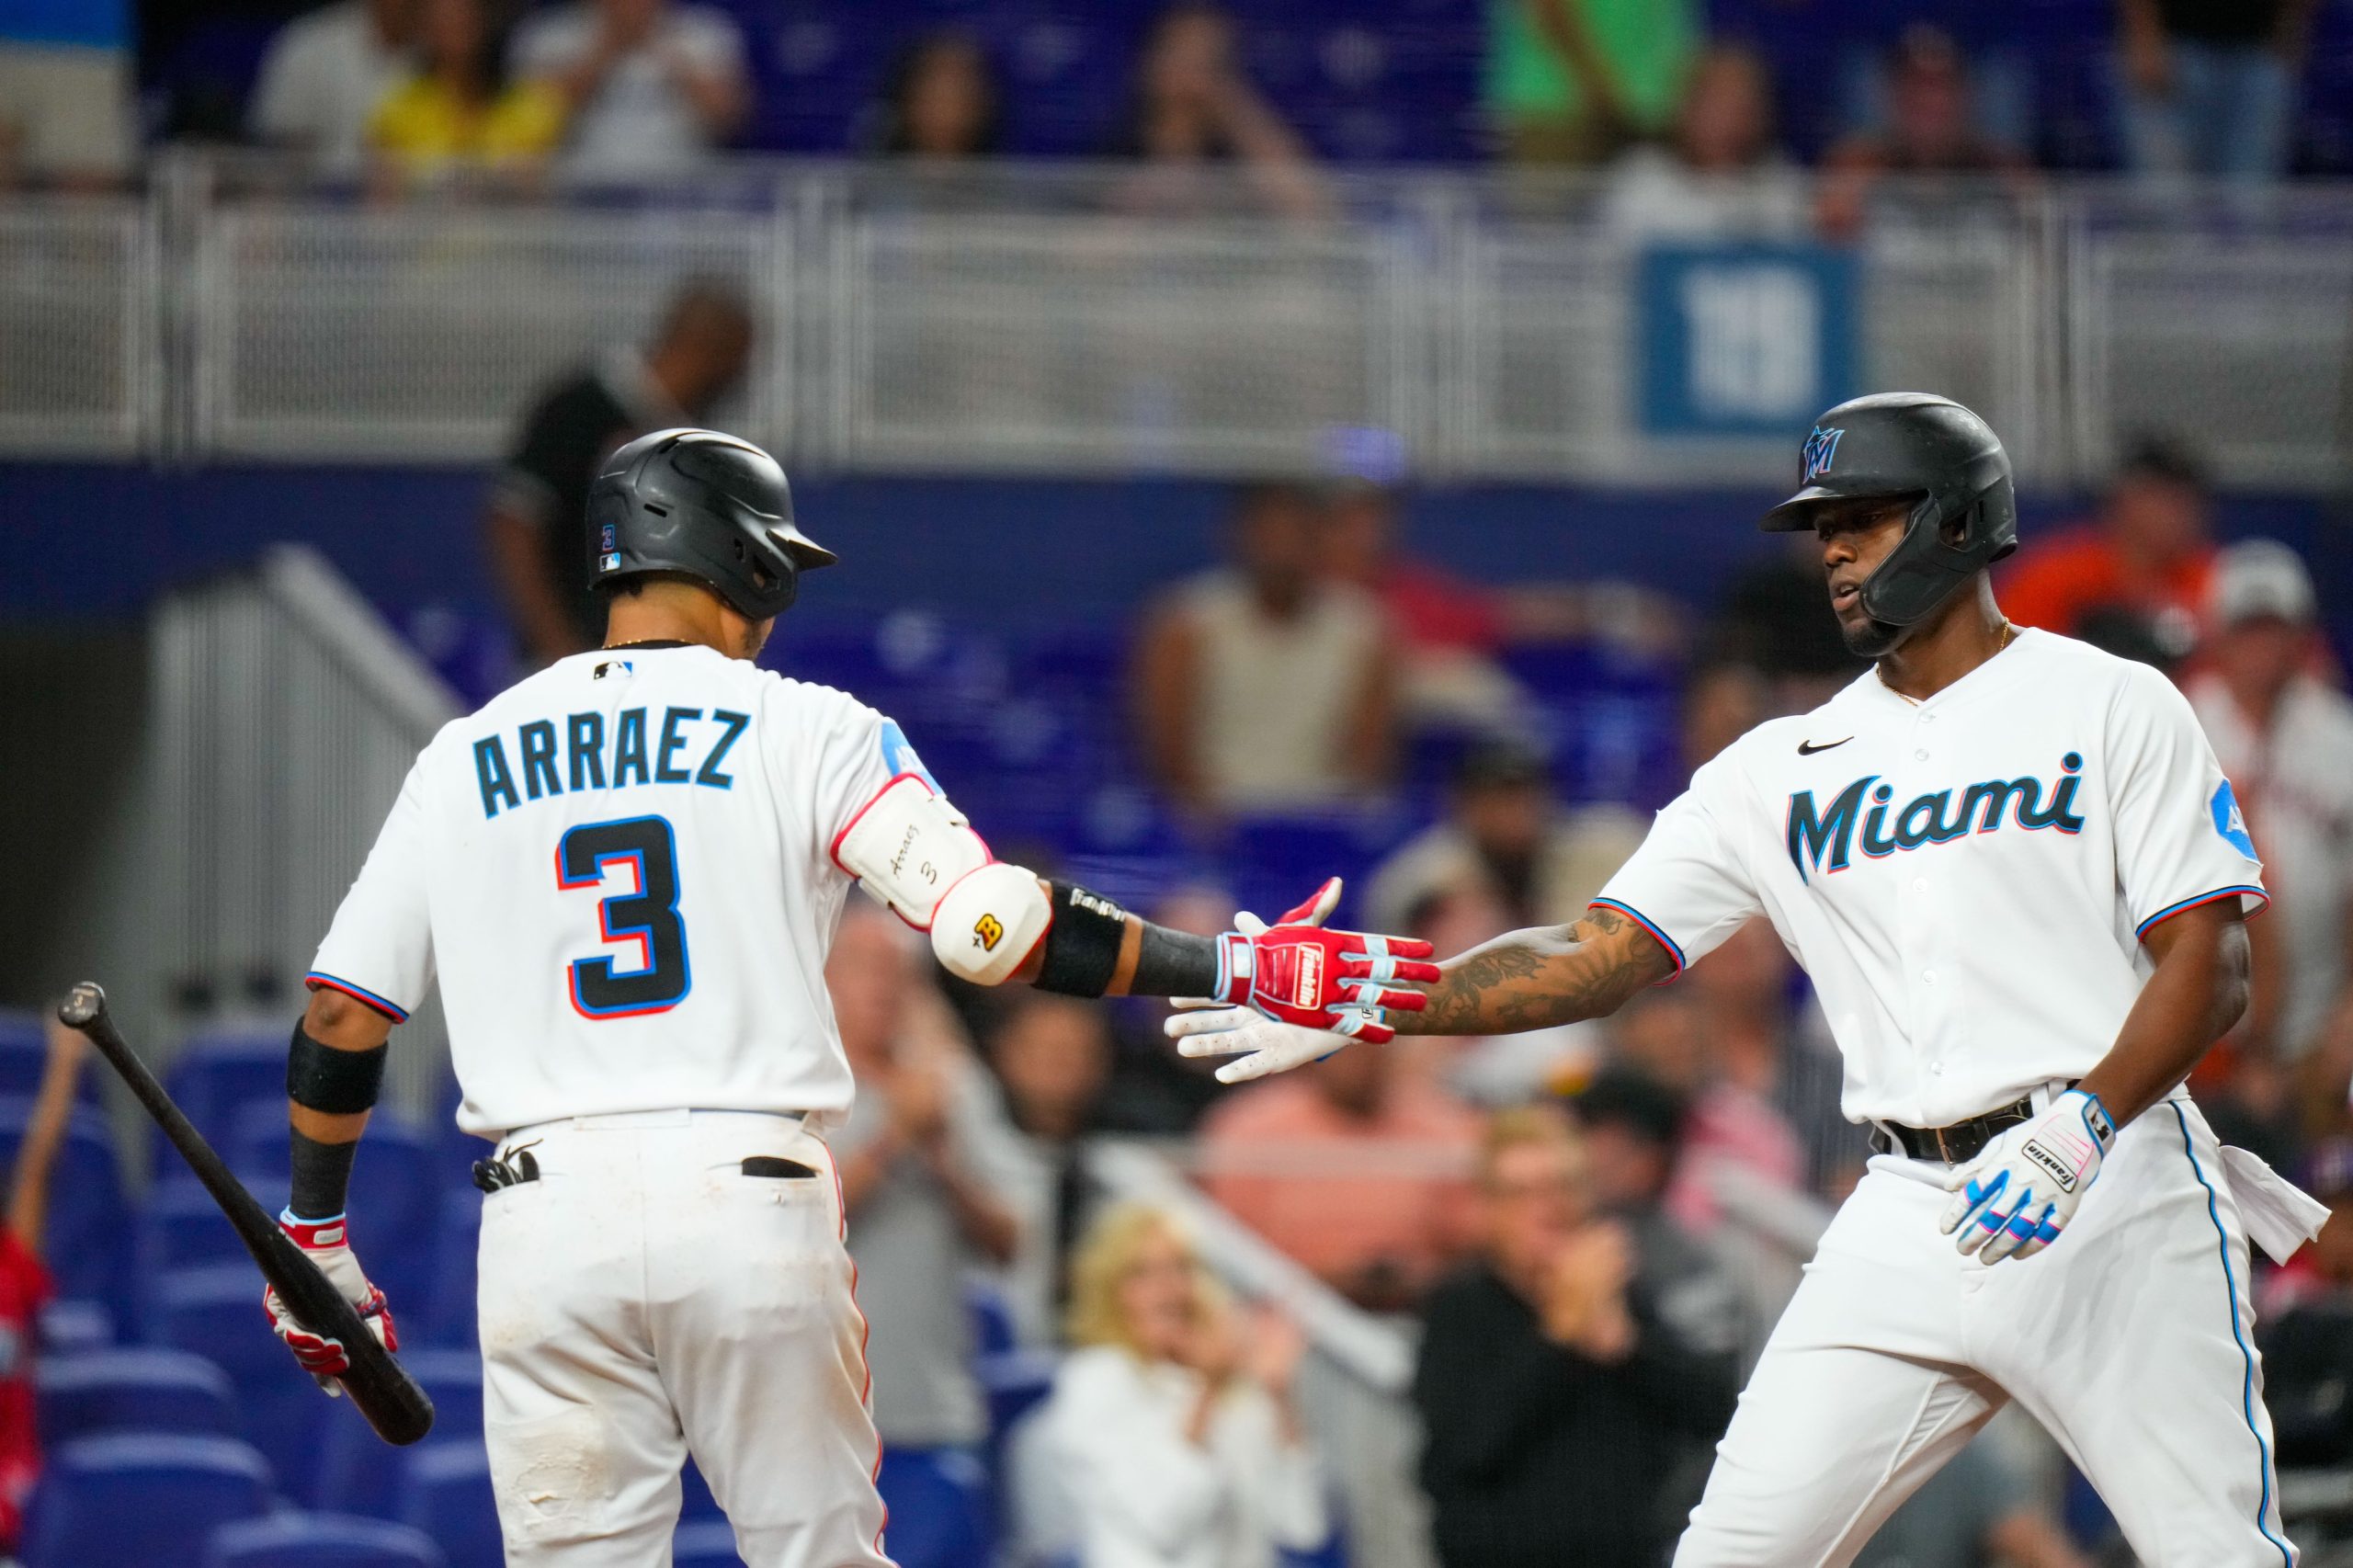 Battle at the Ballpark: Houston Astros vs Miami Marlins